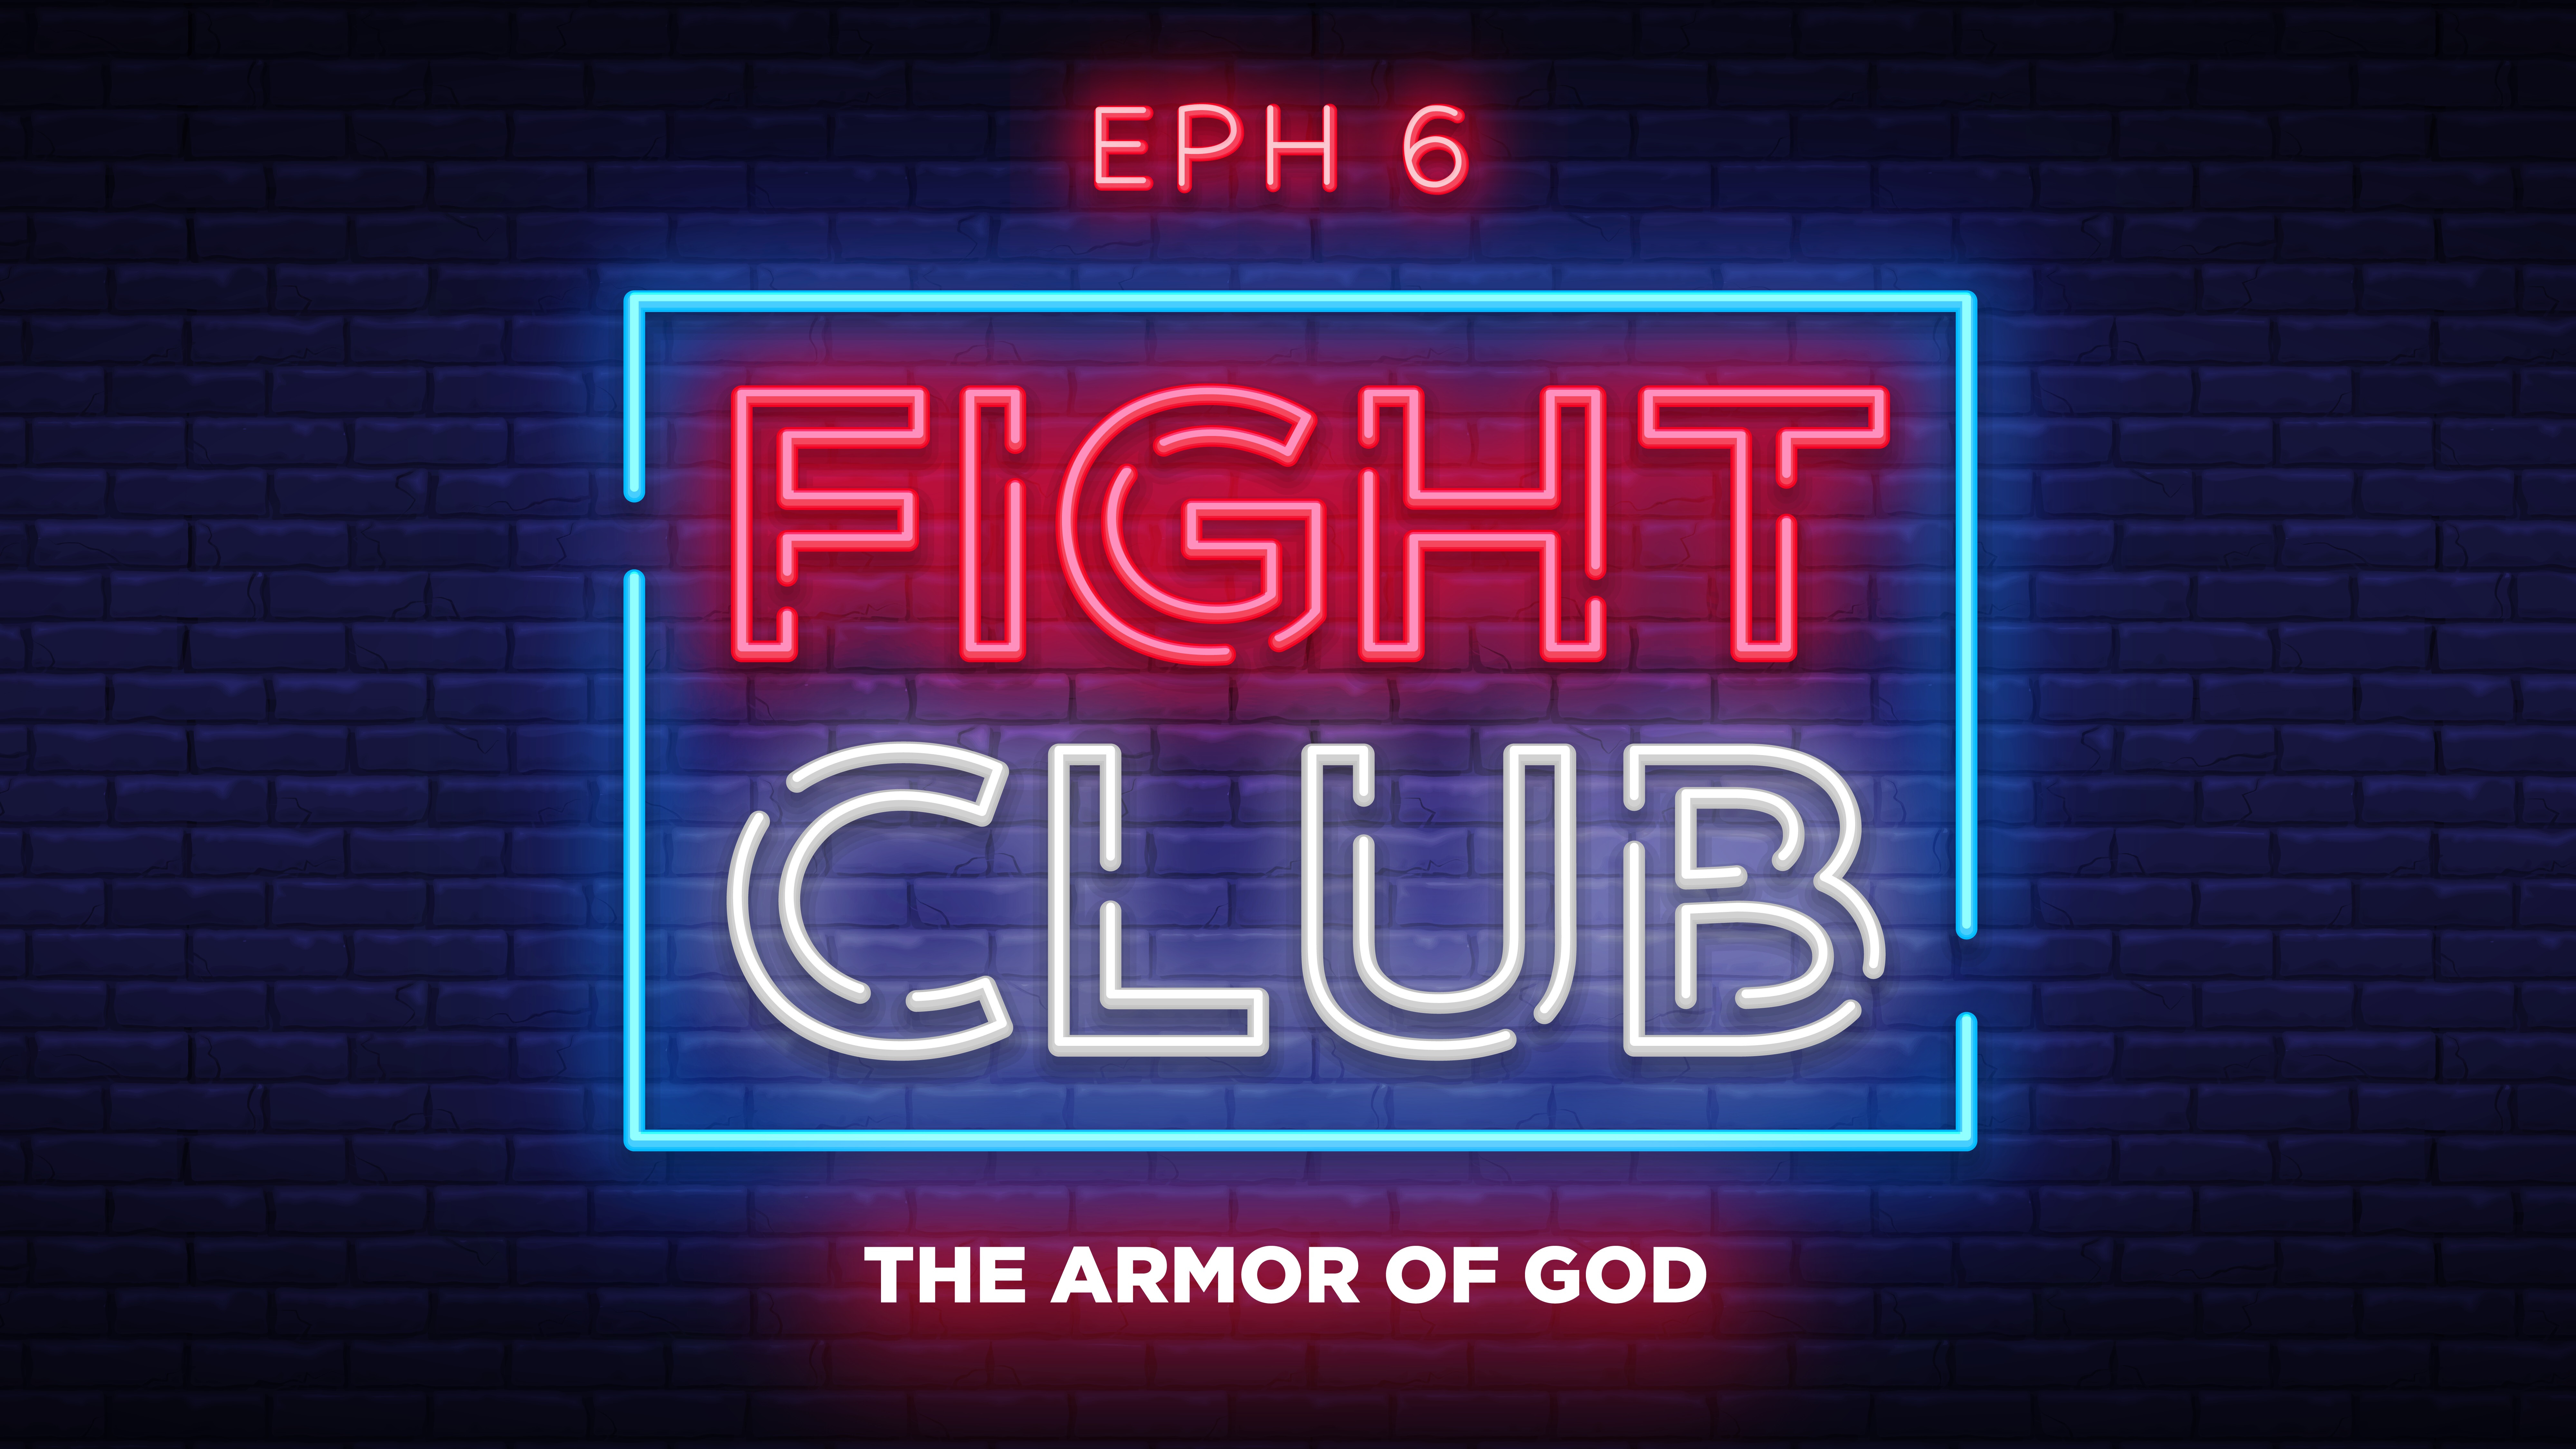 Fight Club: We are in a spiritual battle